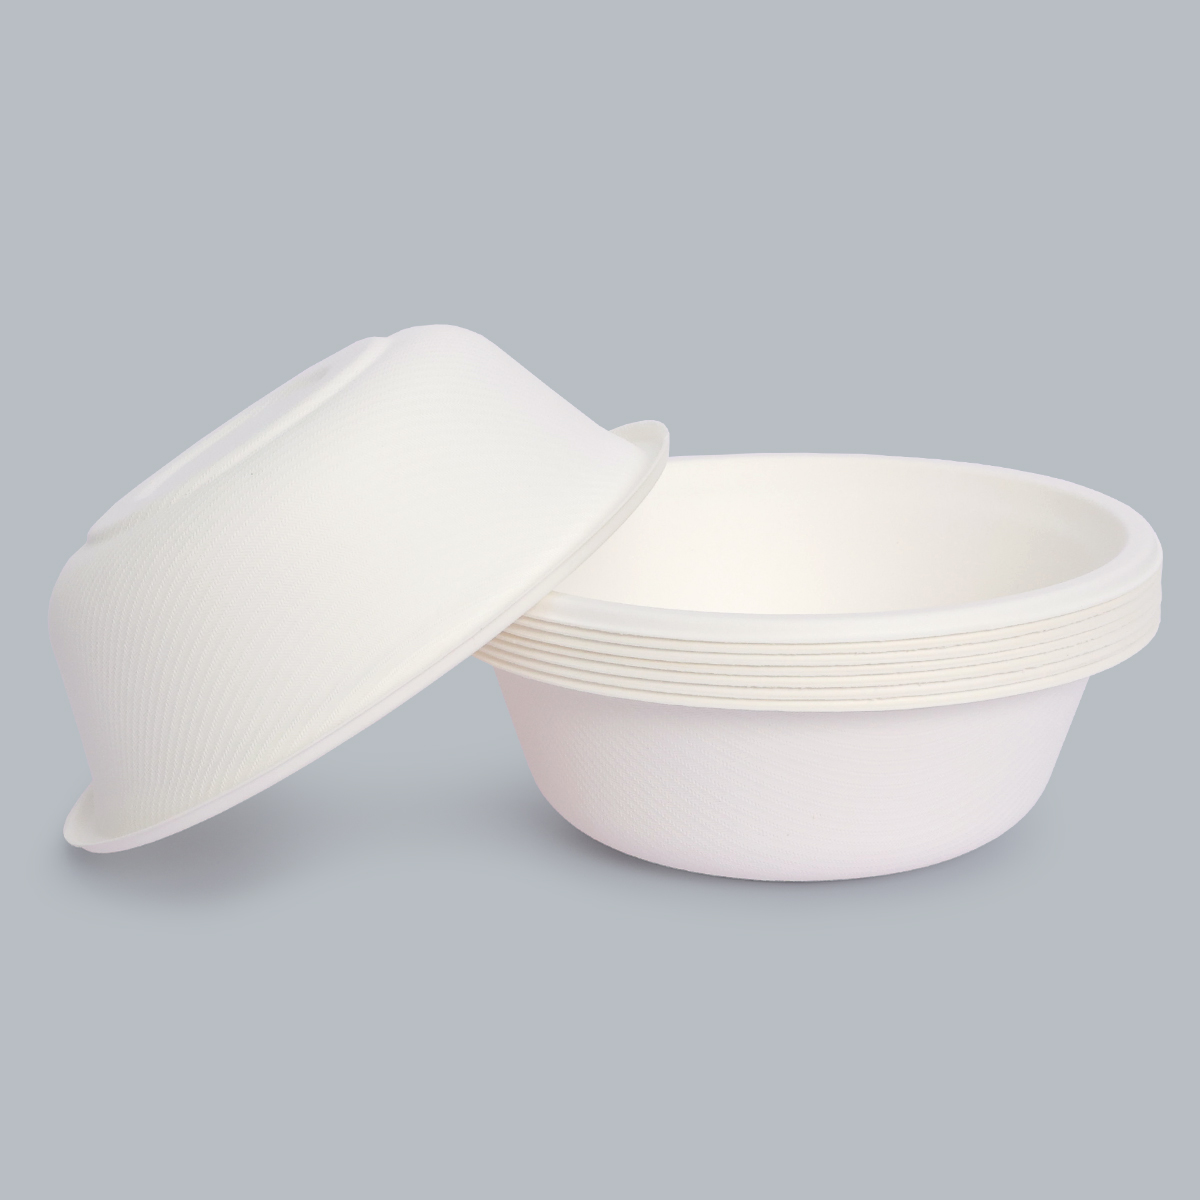 Freezer-safe bowls environmentally friendly tableware Waterproof bowls